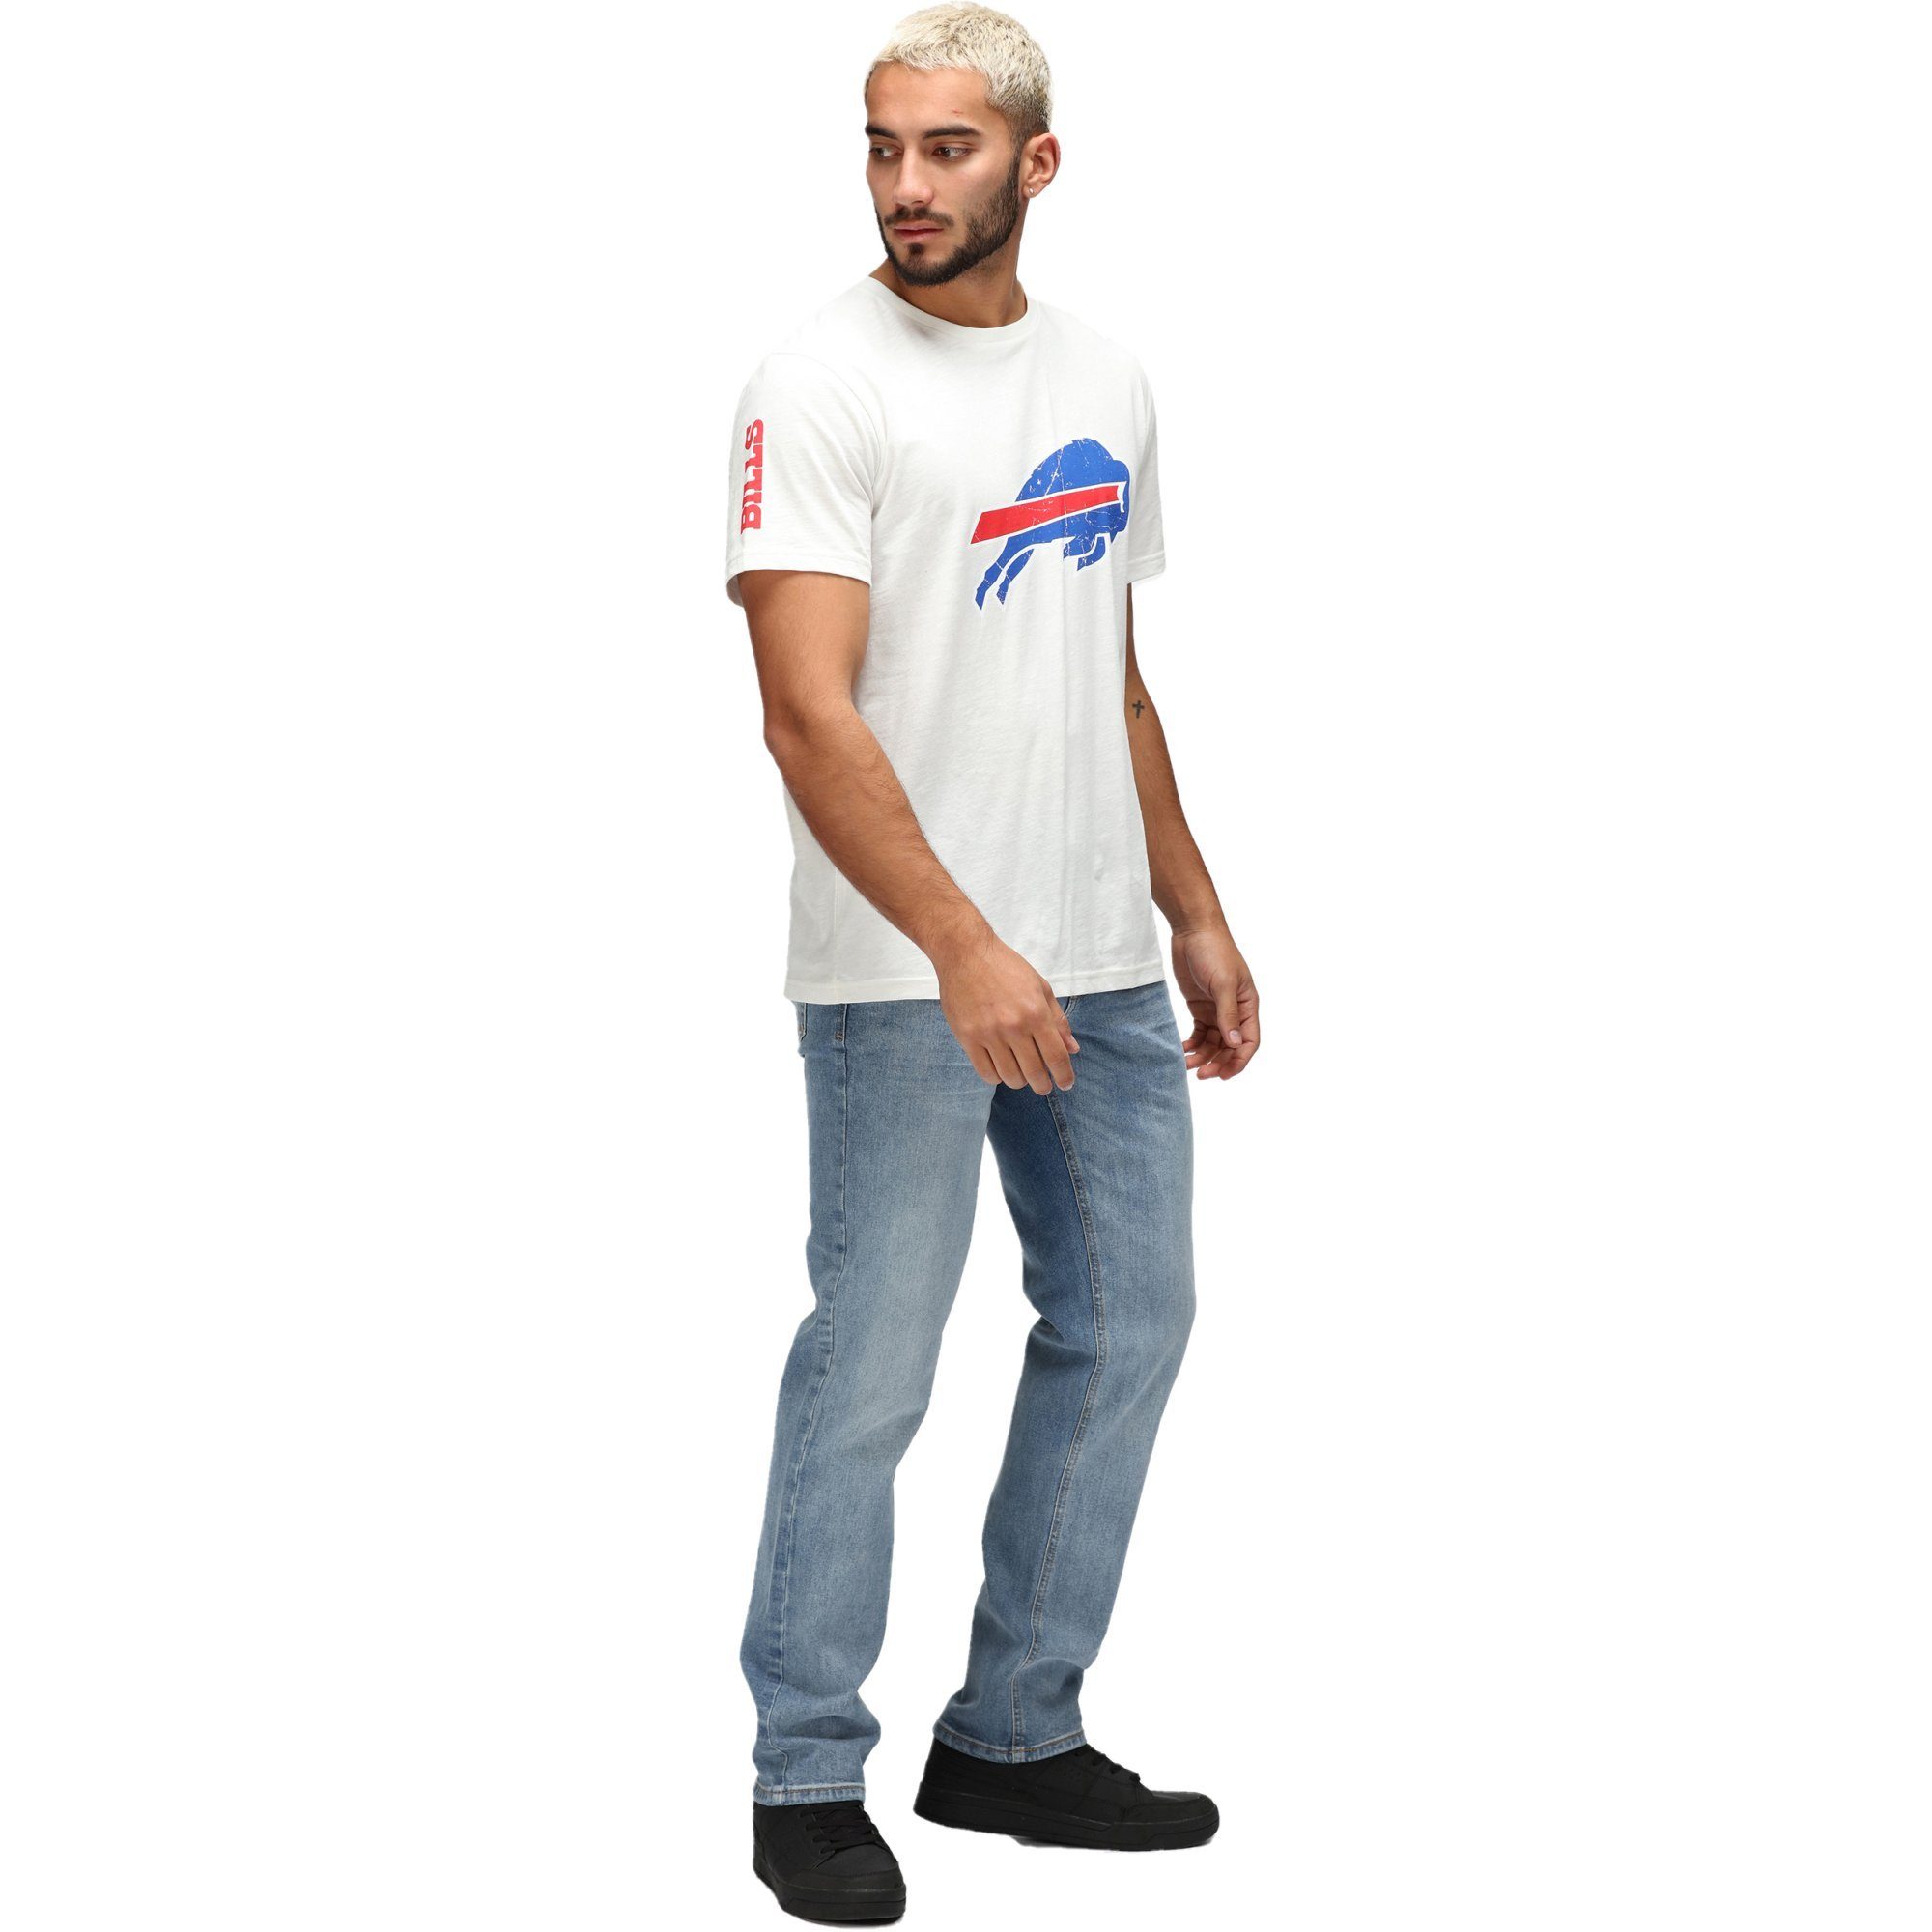 Re:Covered Bills ecru NFL Buffalo Print-Shirt Recovered